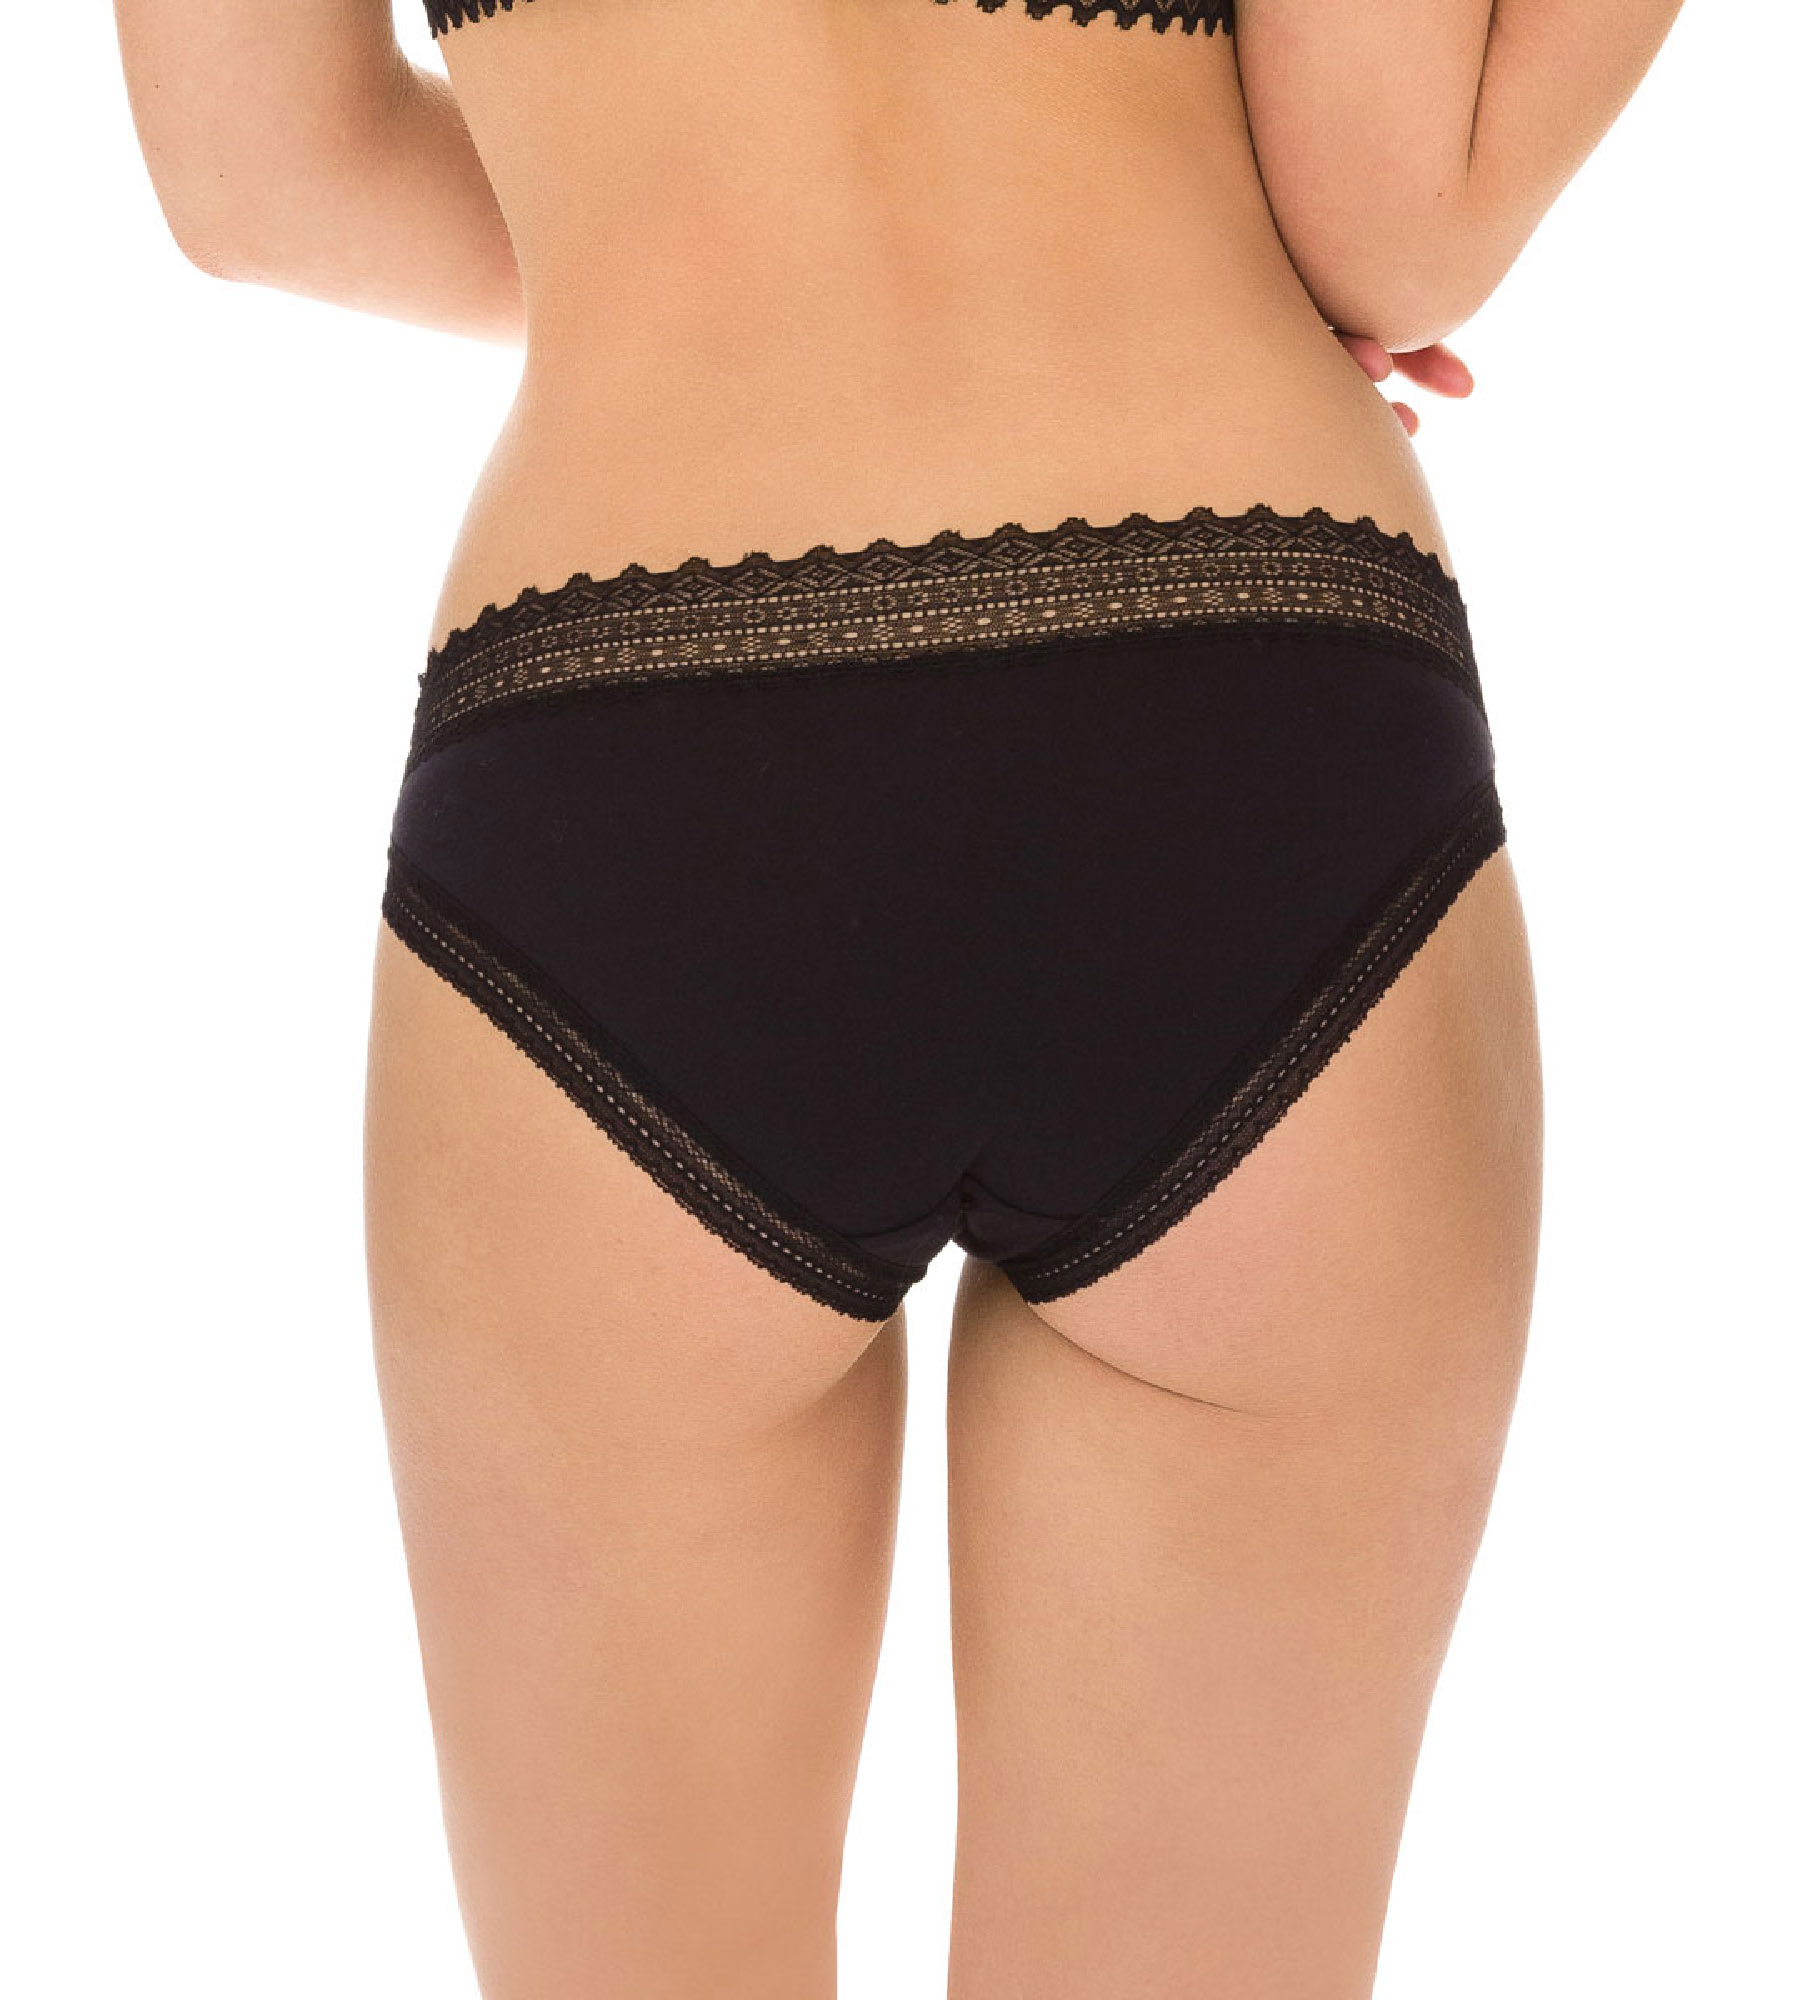 Couples Lovers Men Women C-String Thong Panty Underwear Visible Network 2  Pcs In 1 Set (Black)